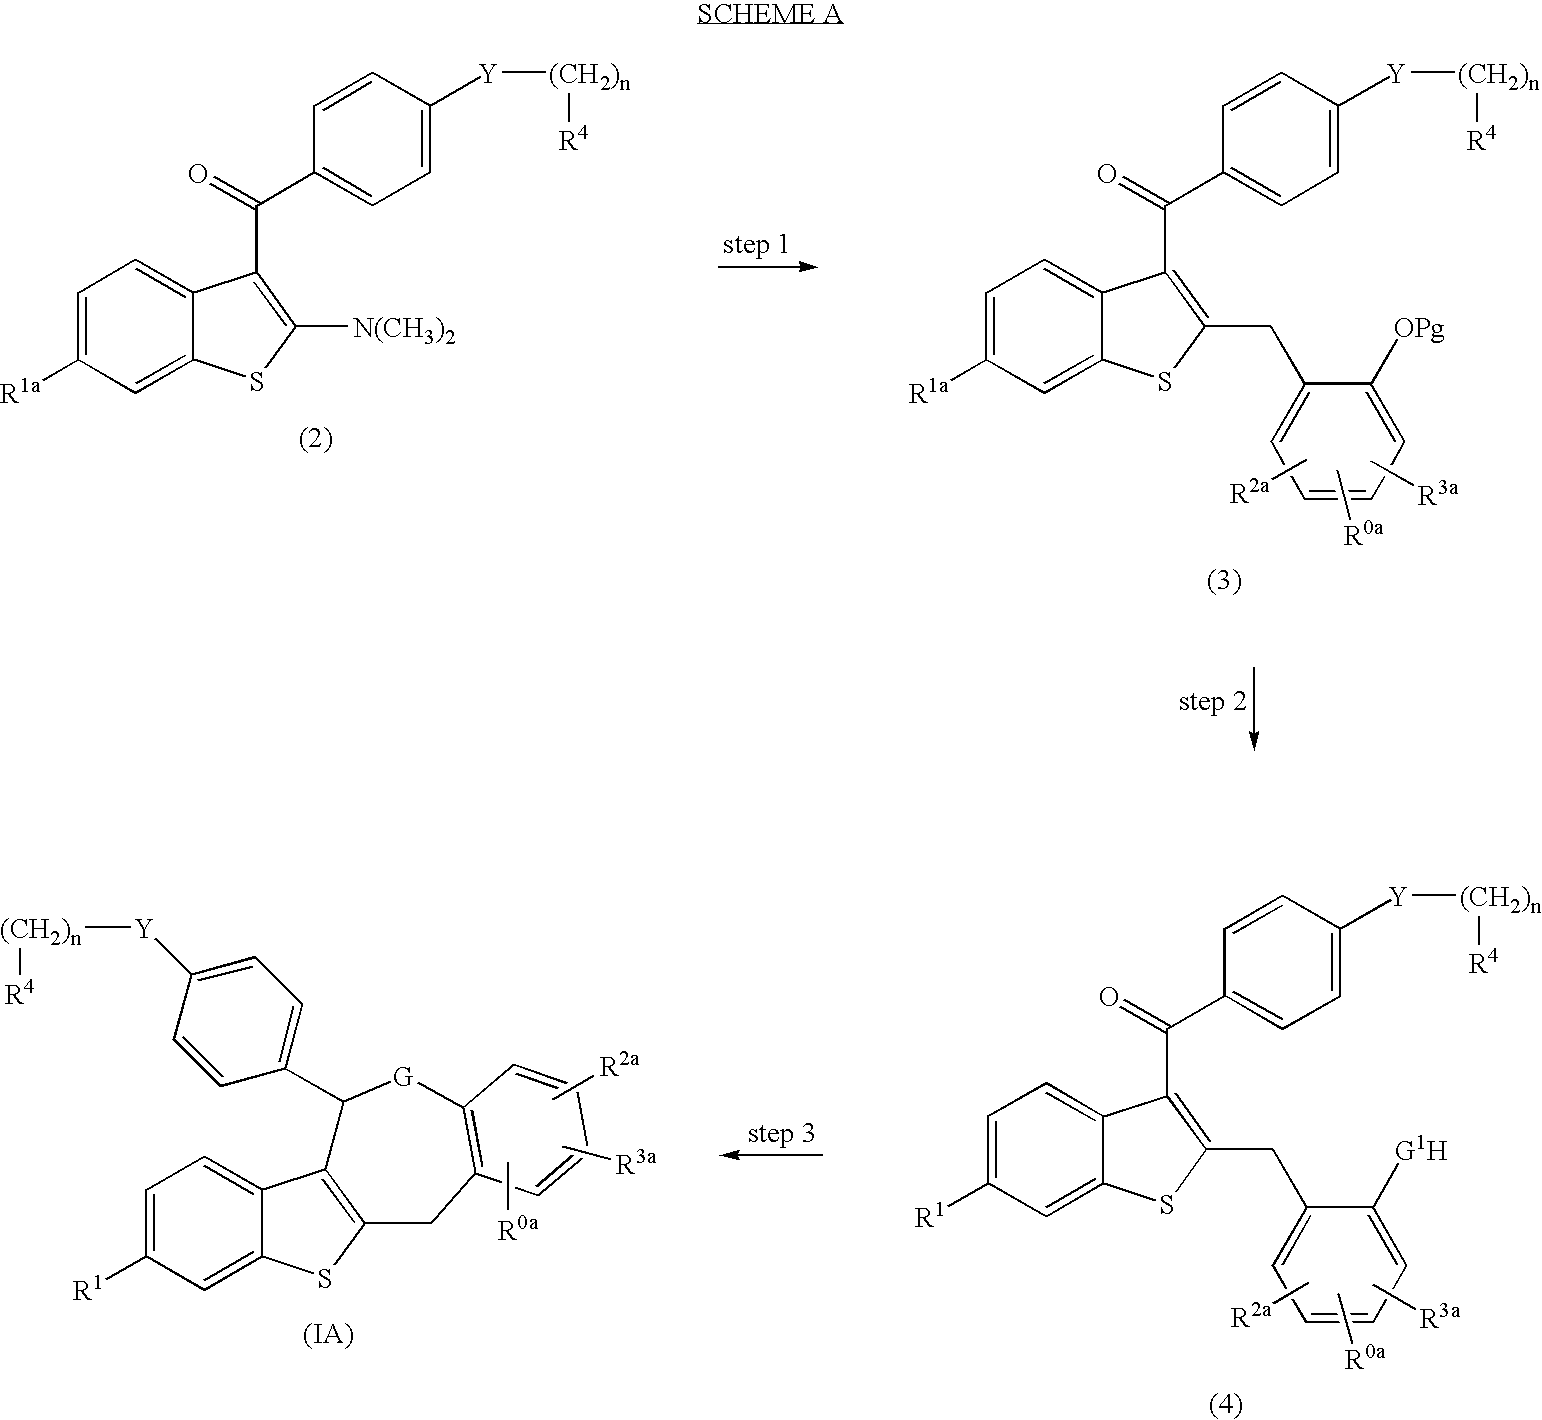 Dihydro-dibenzo[b,e]oxepine based selective estrogren receptor modulators, compositions and methods